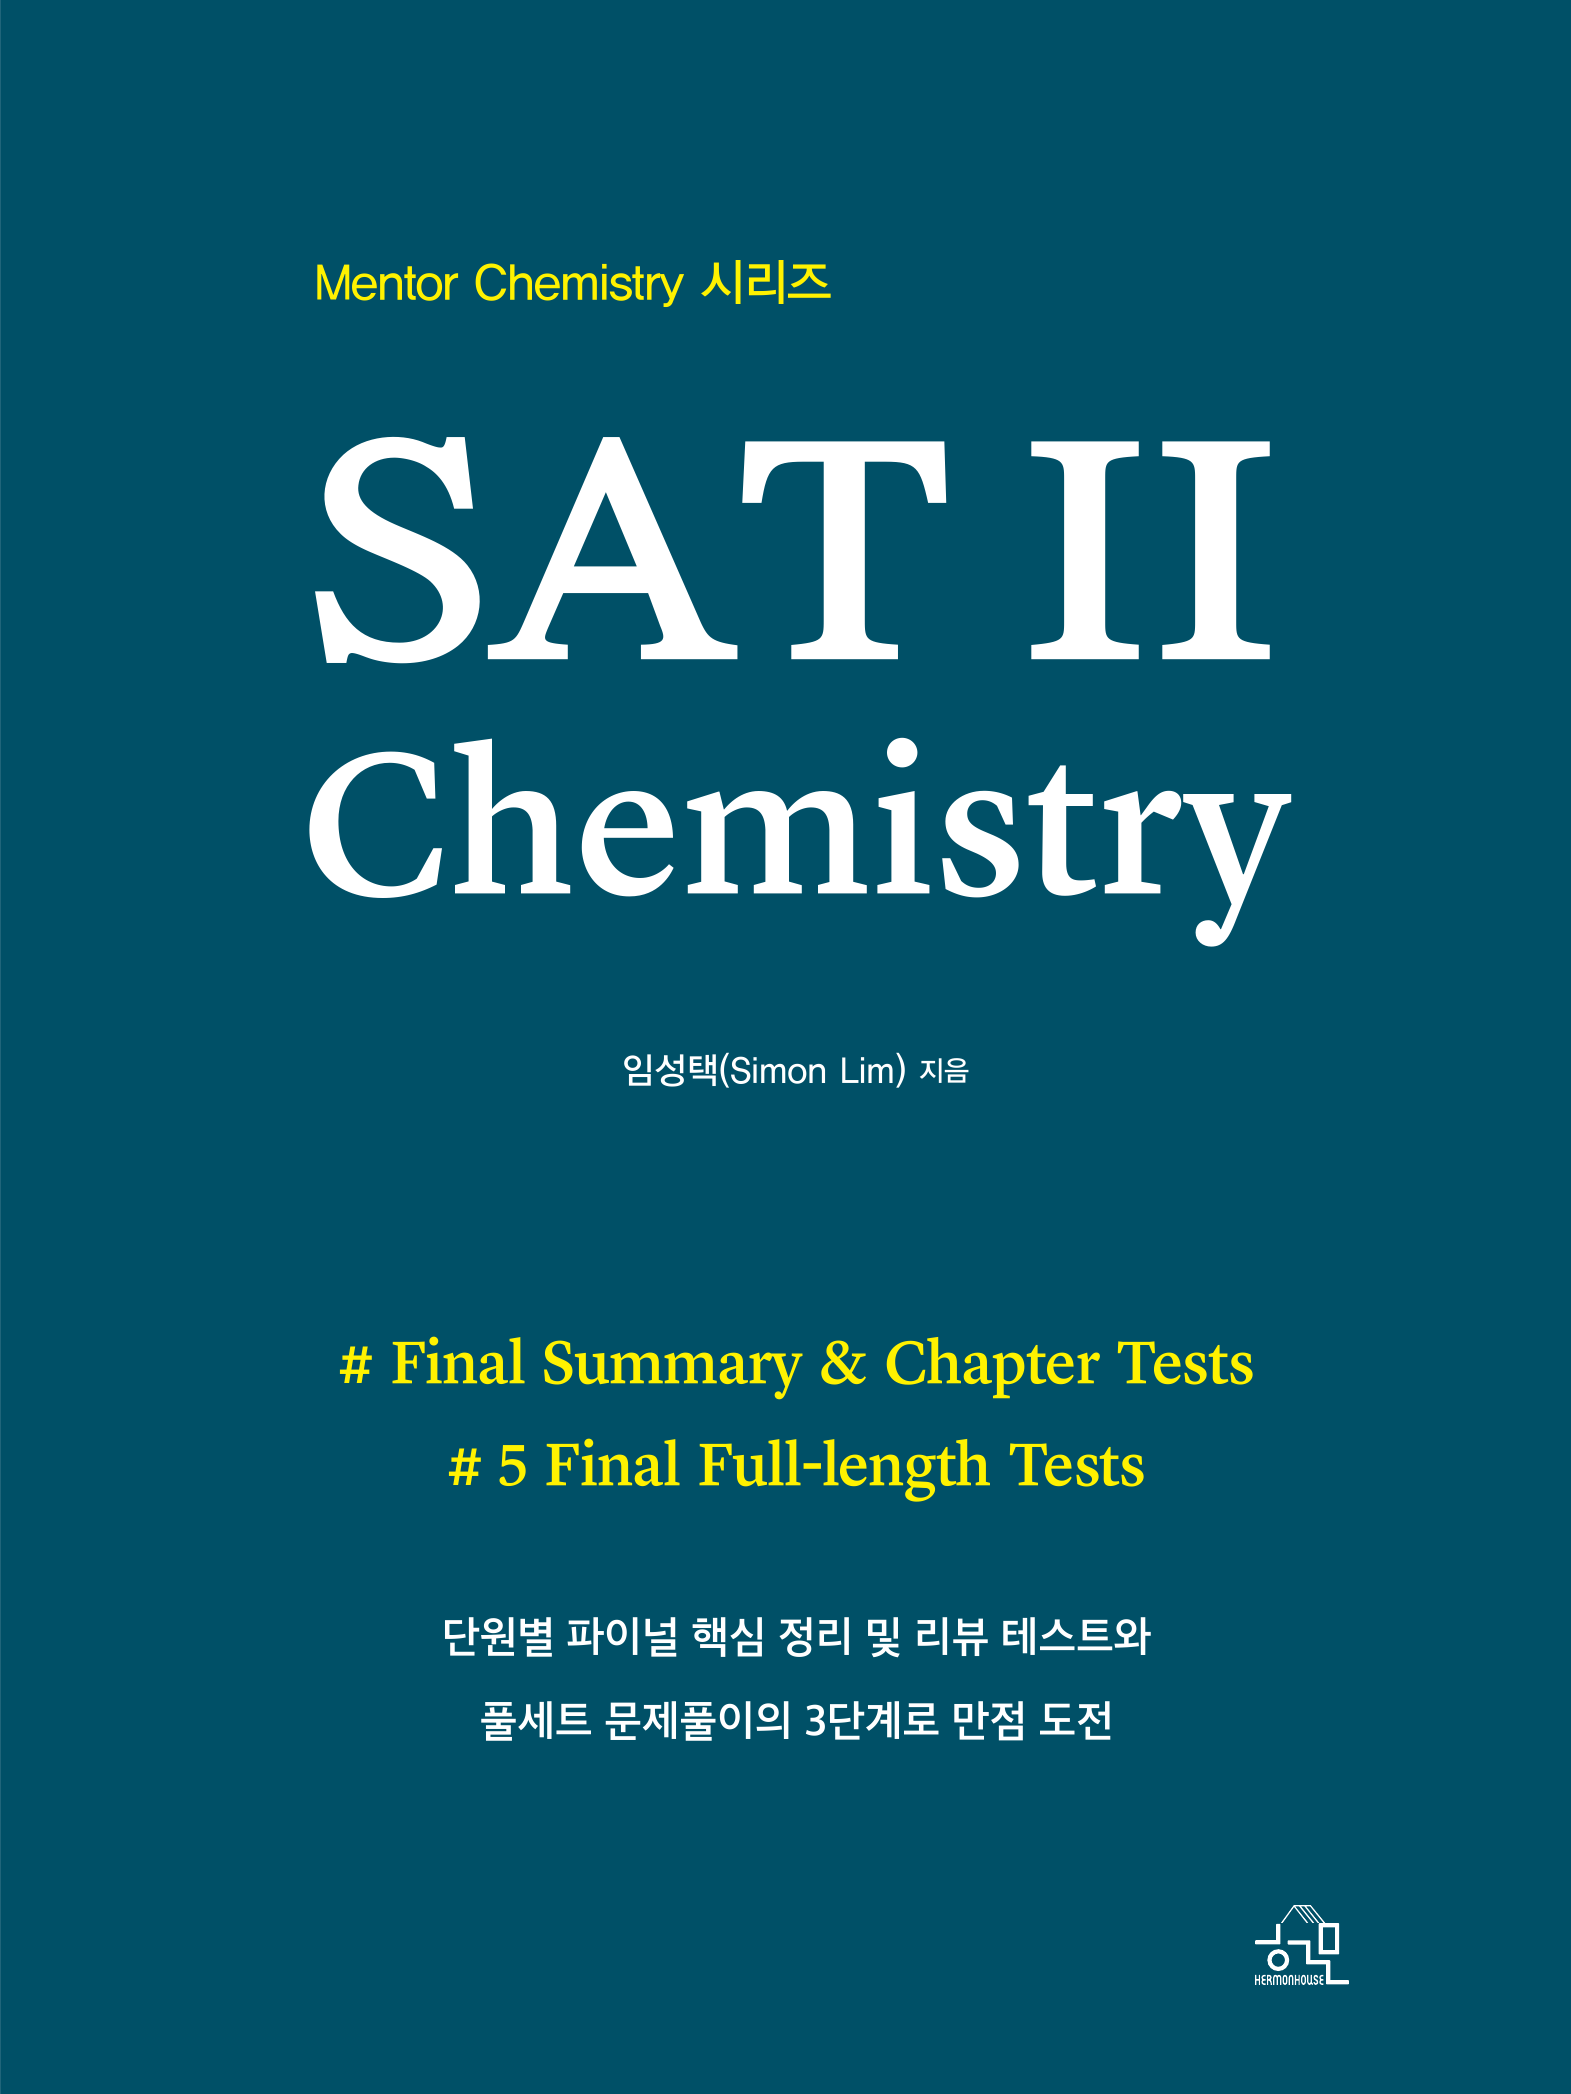 SAT II CHEMISTRY